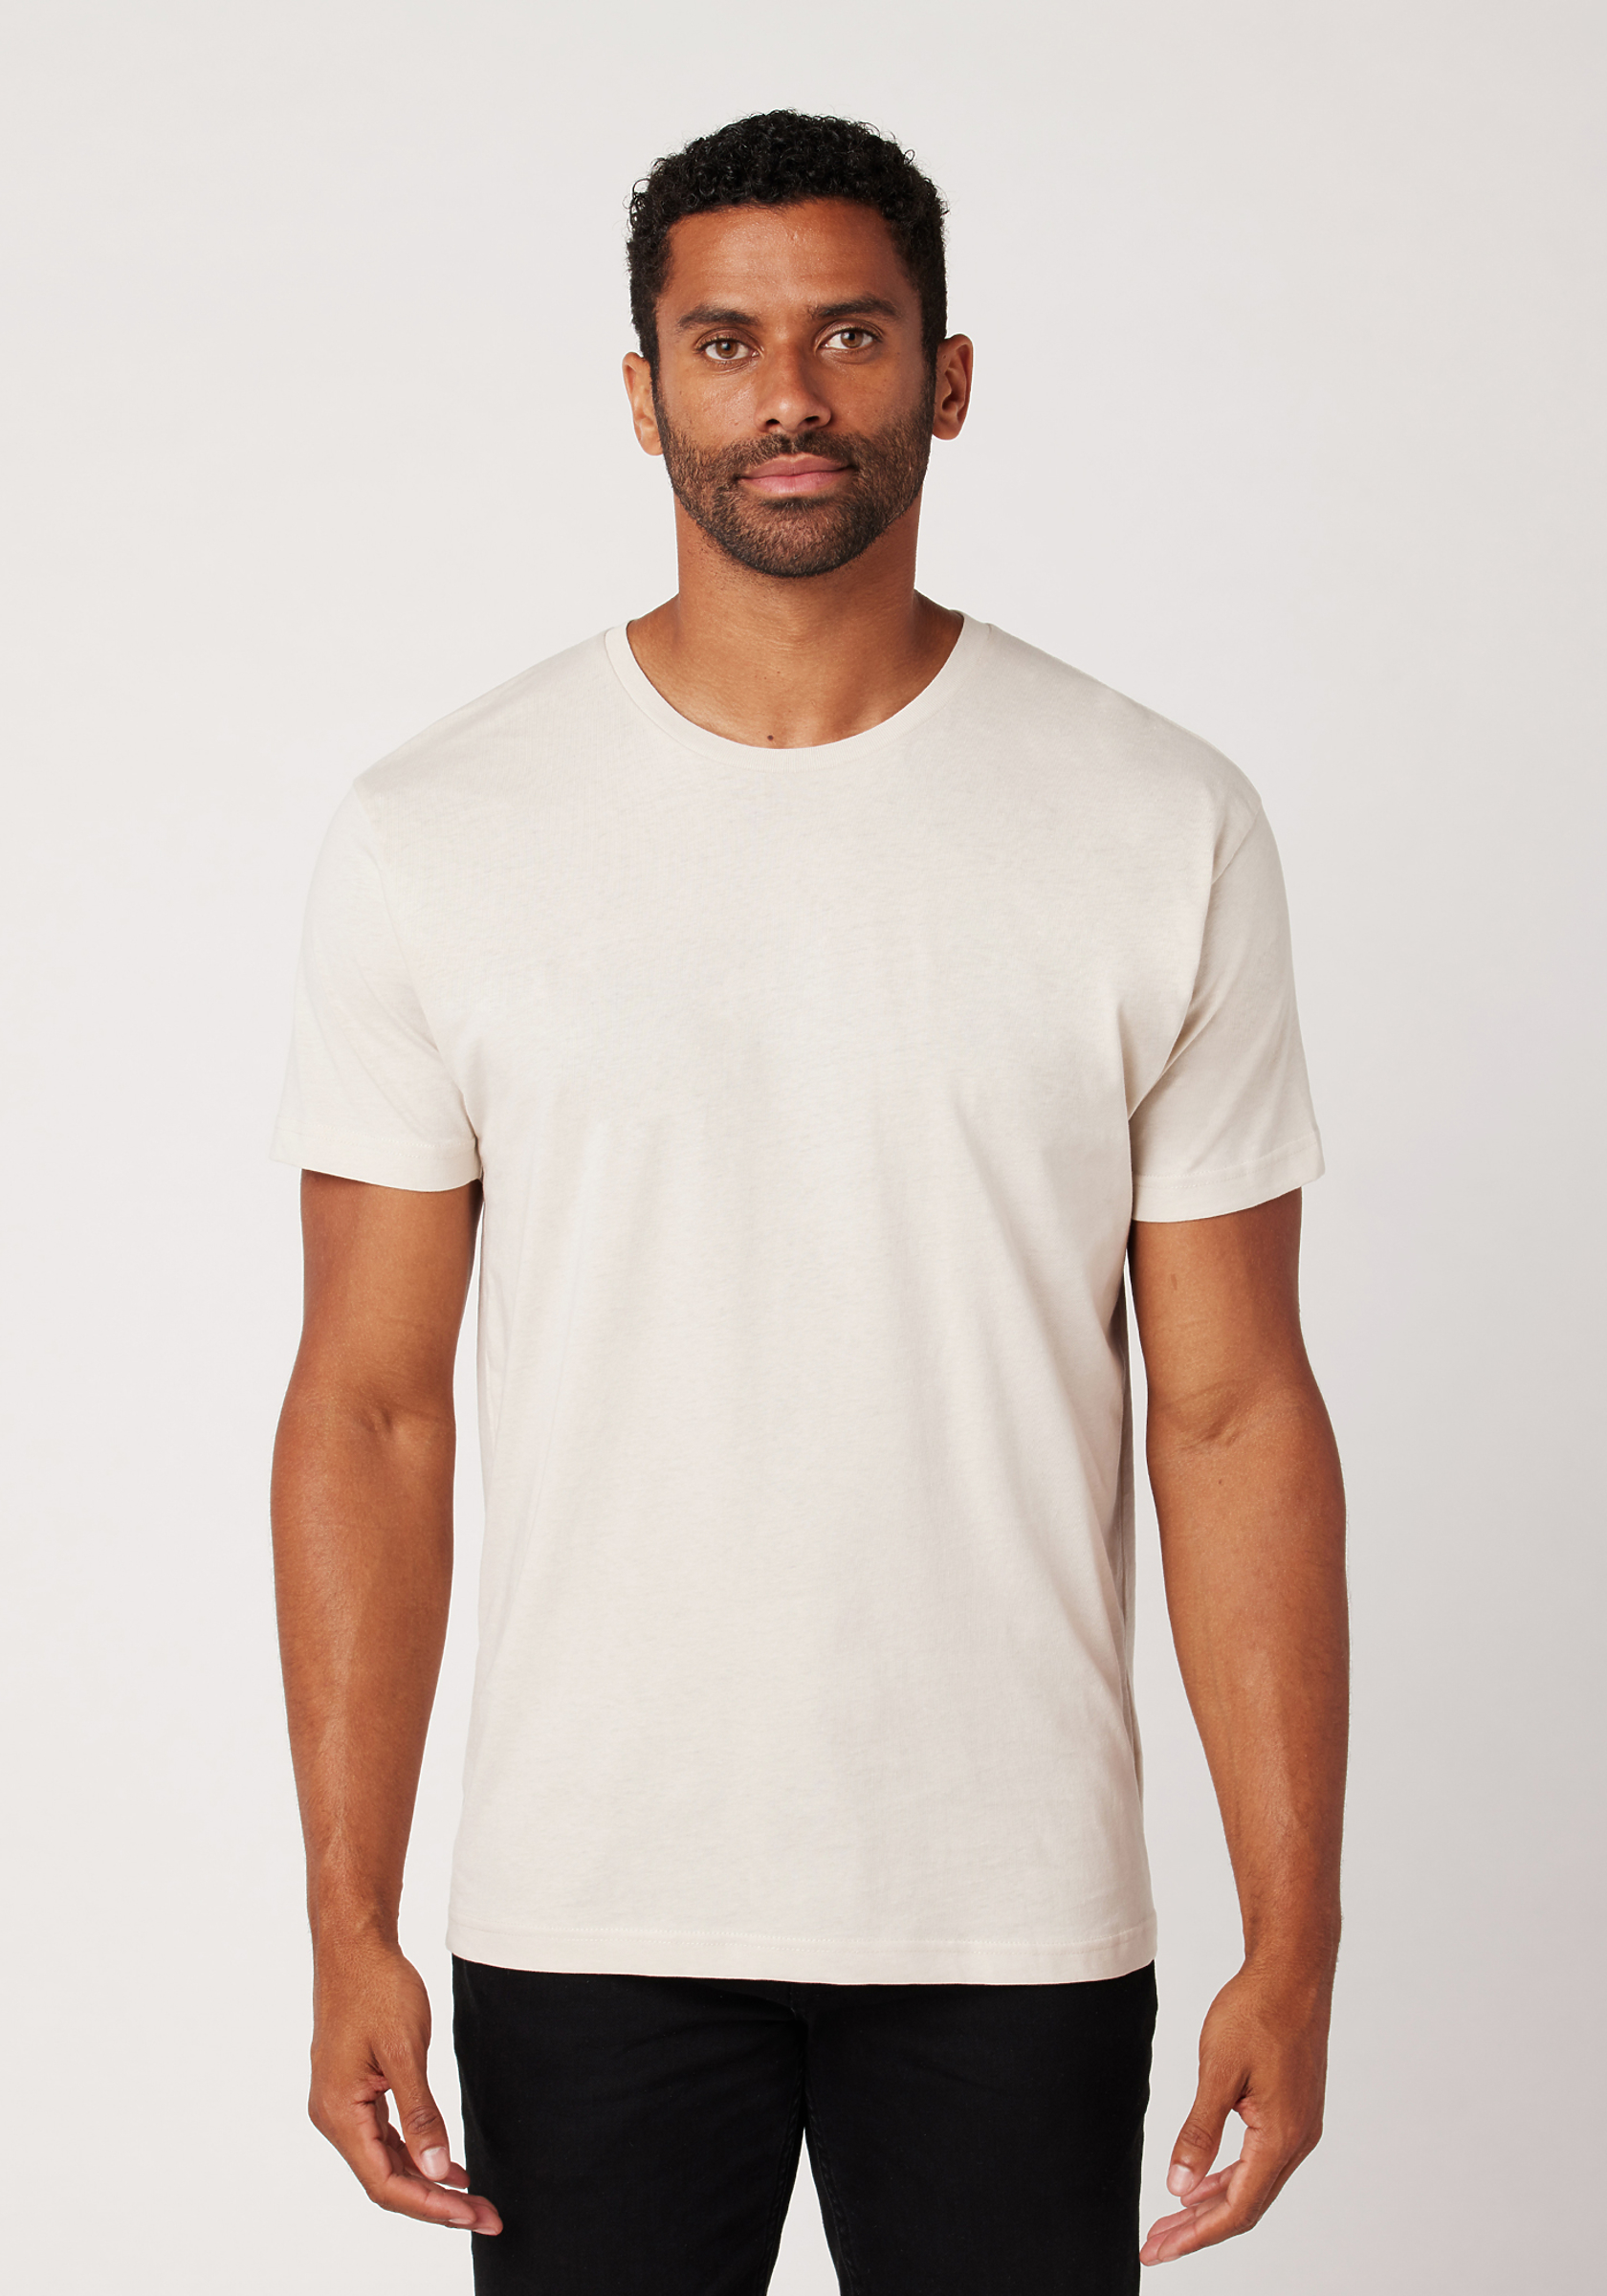 LV Mix Supreme Black White 3D T-Shirt